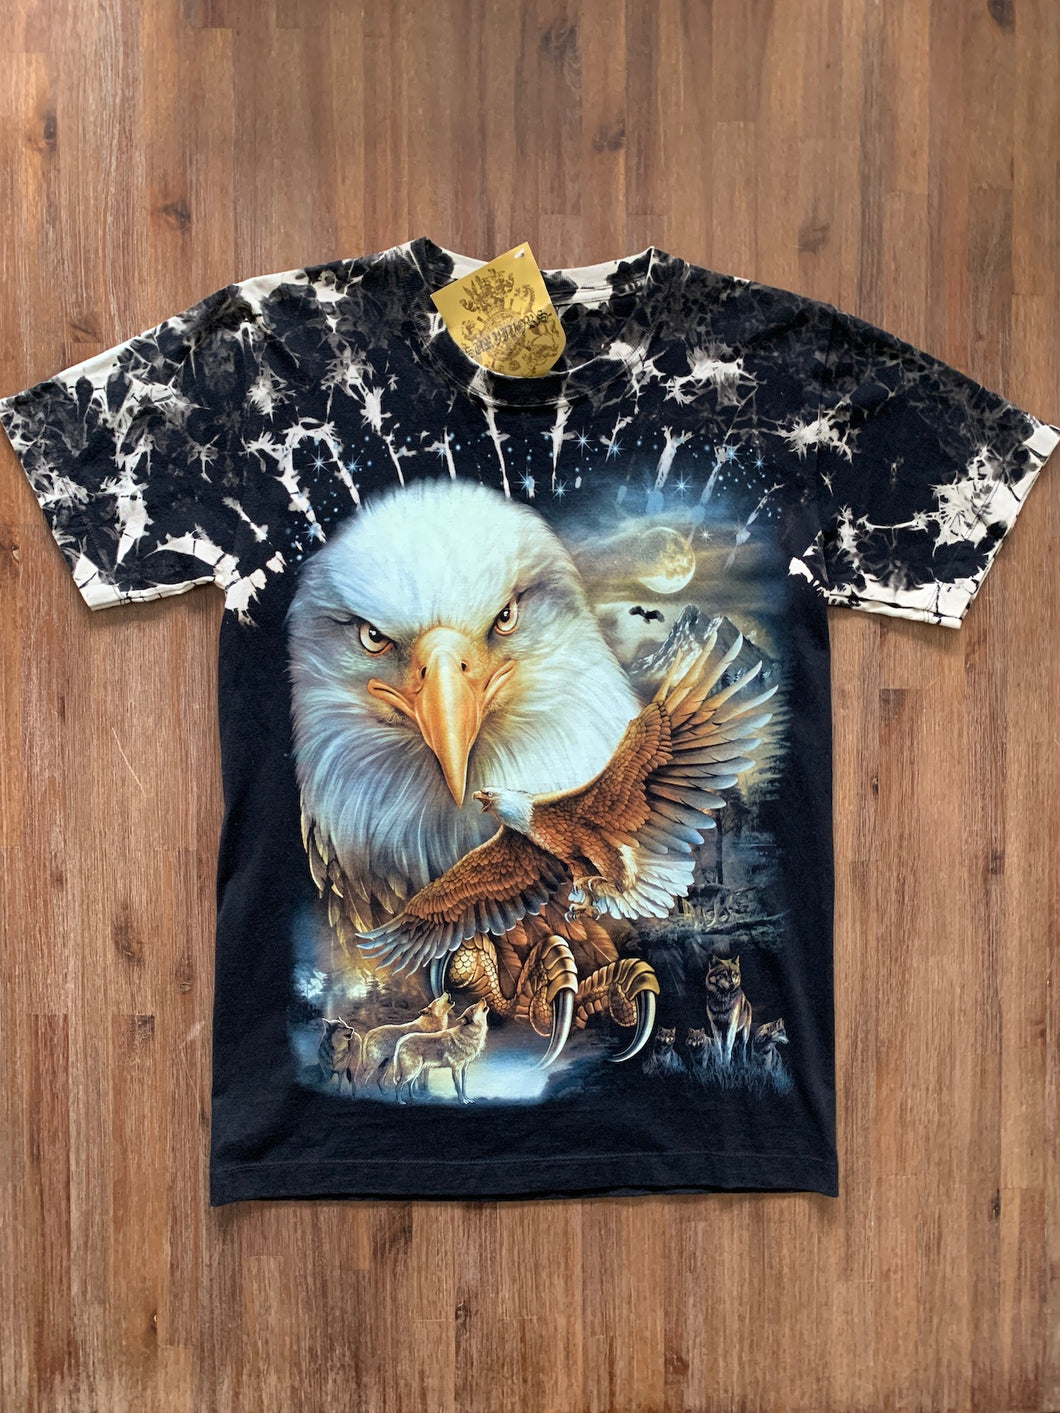 SURVIVORS Size S American Eagles Tye Die Black T-Shirt Men's